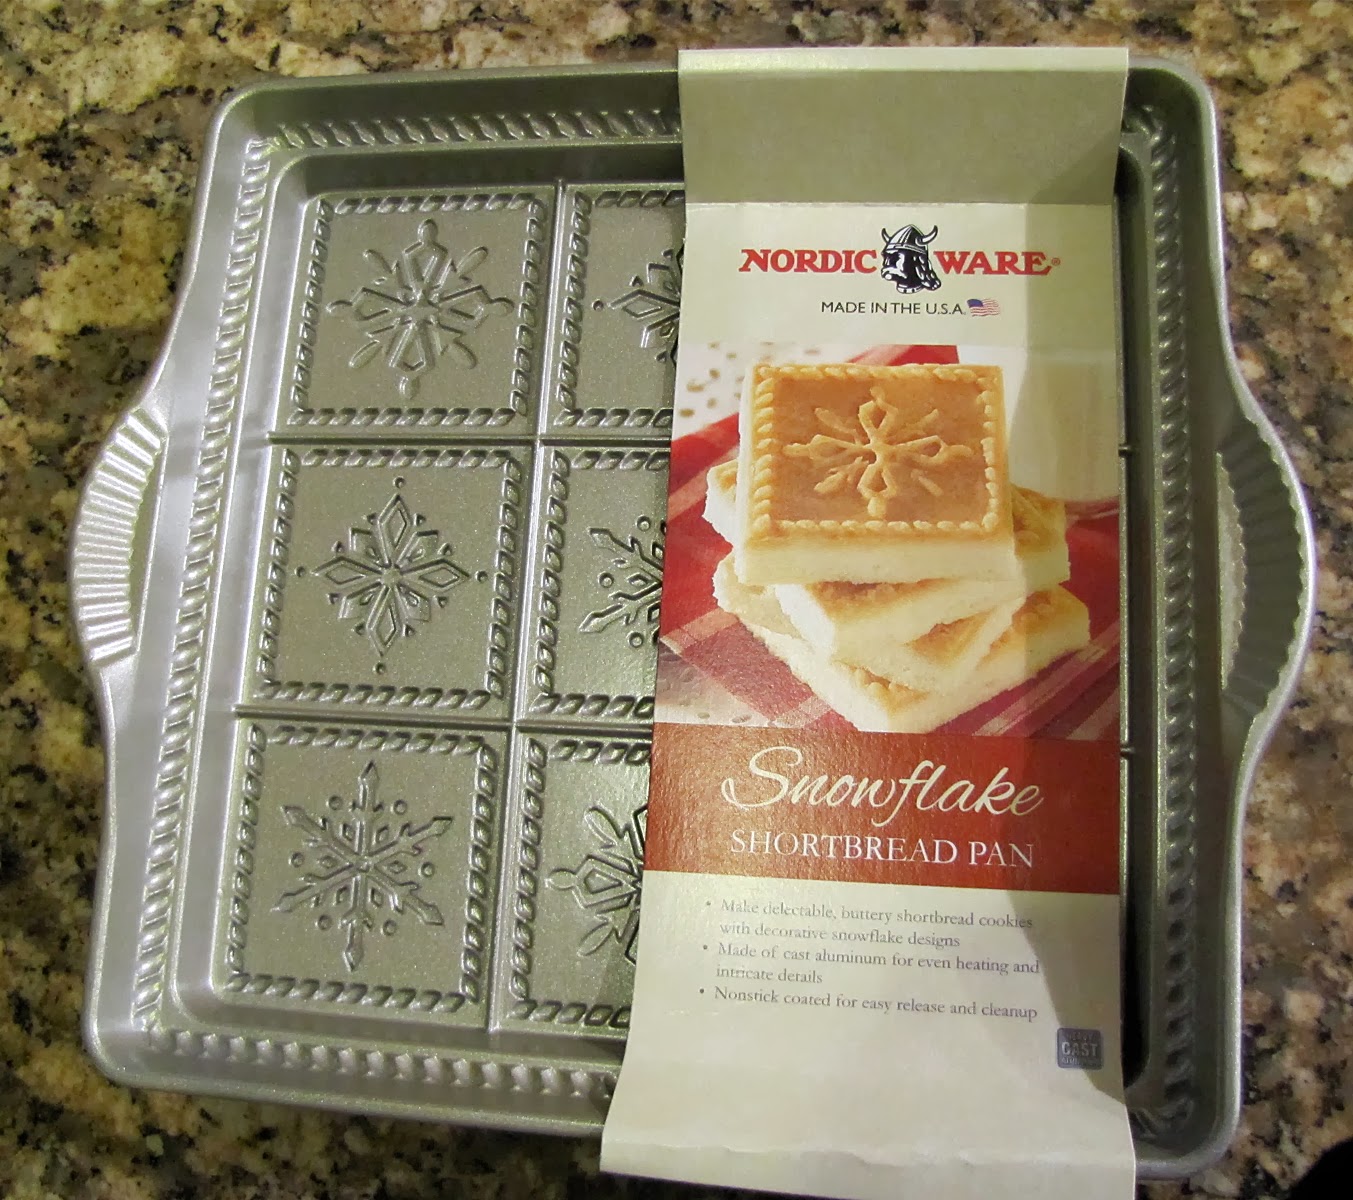 Nordic Ware Sweet Snowflakes Shortbread Pan